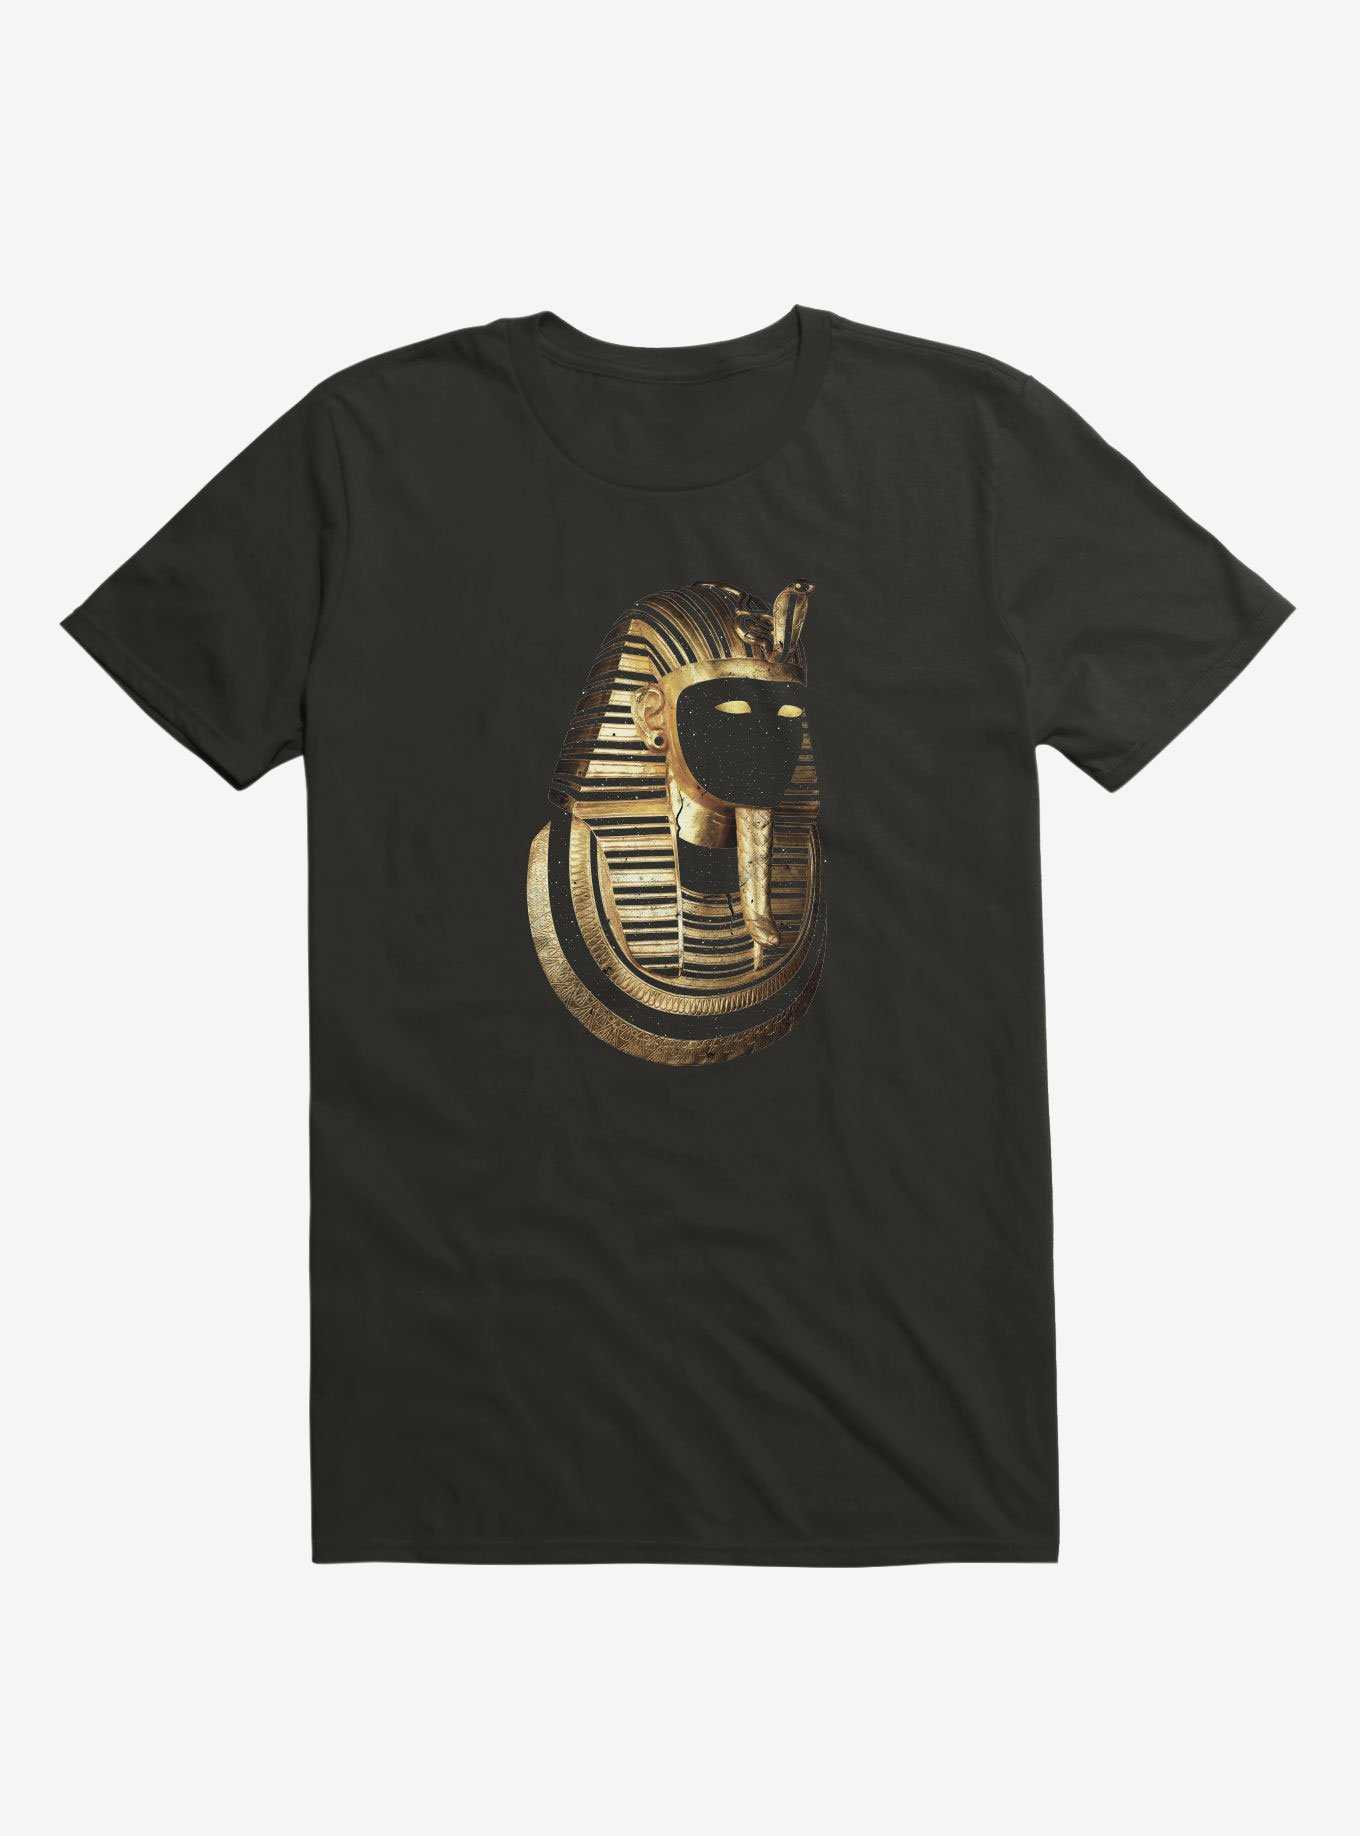 Psusennes MMXII T-Shirt, , hi-res